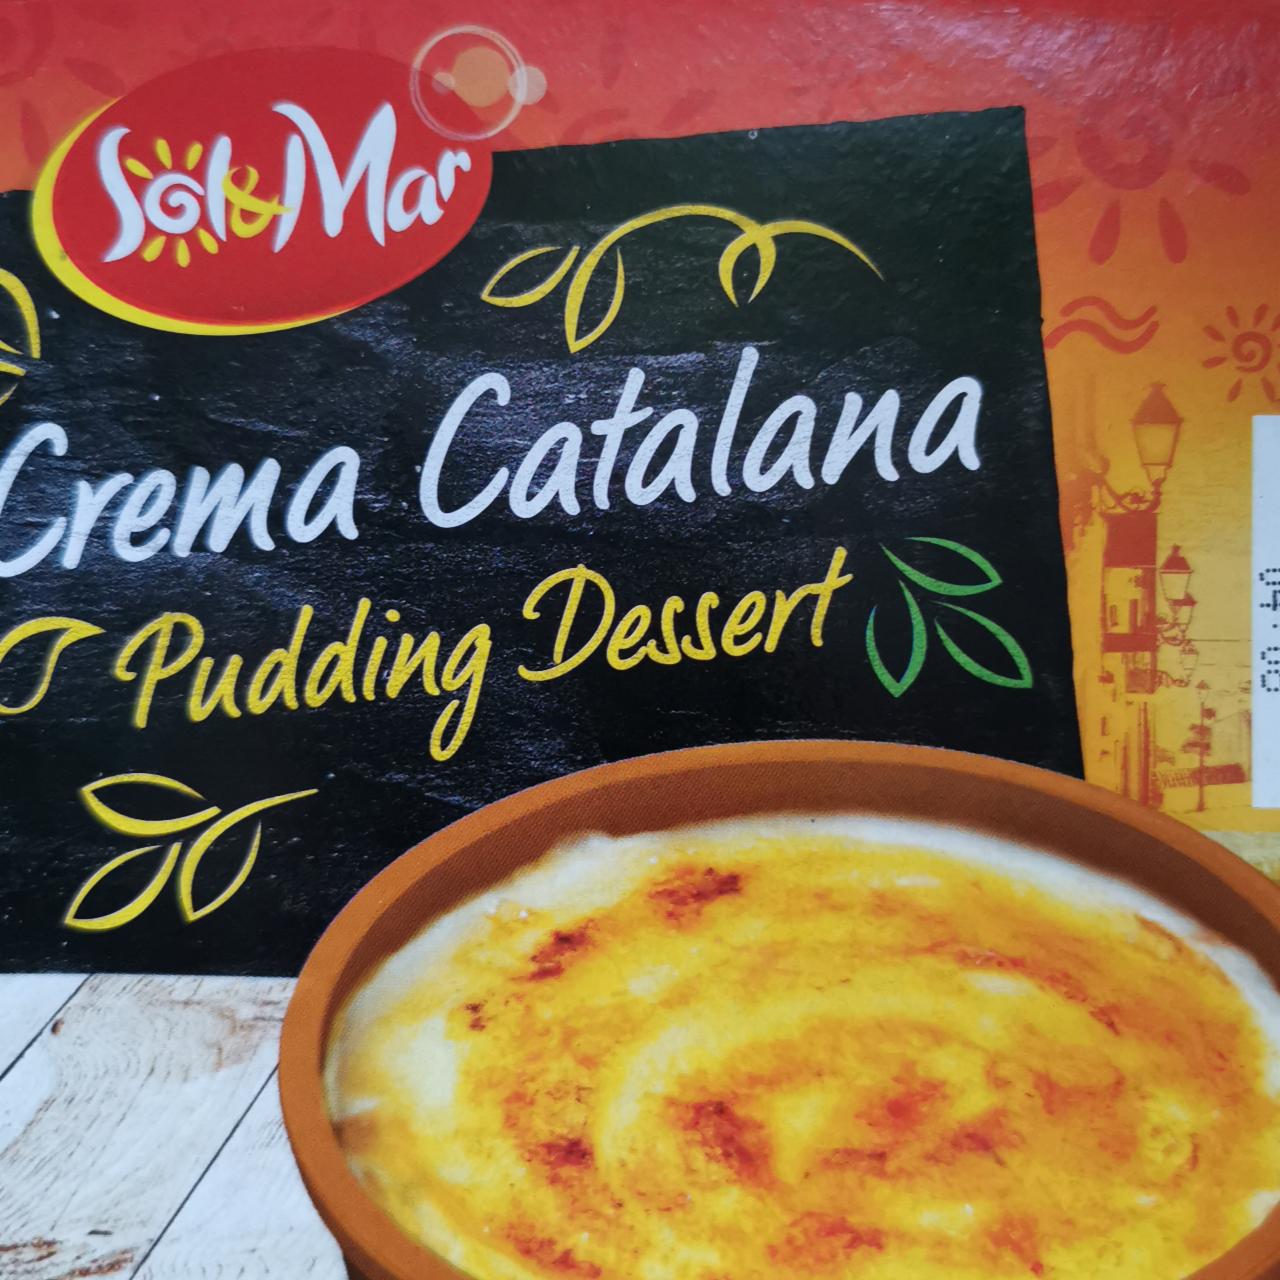 Fotografie - Crema Catalana Pudding Dessert Sol&Mar